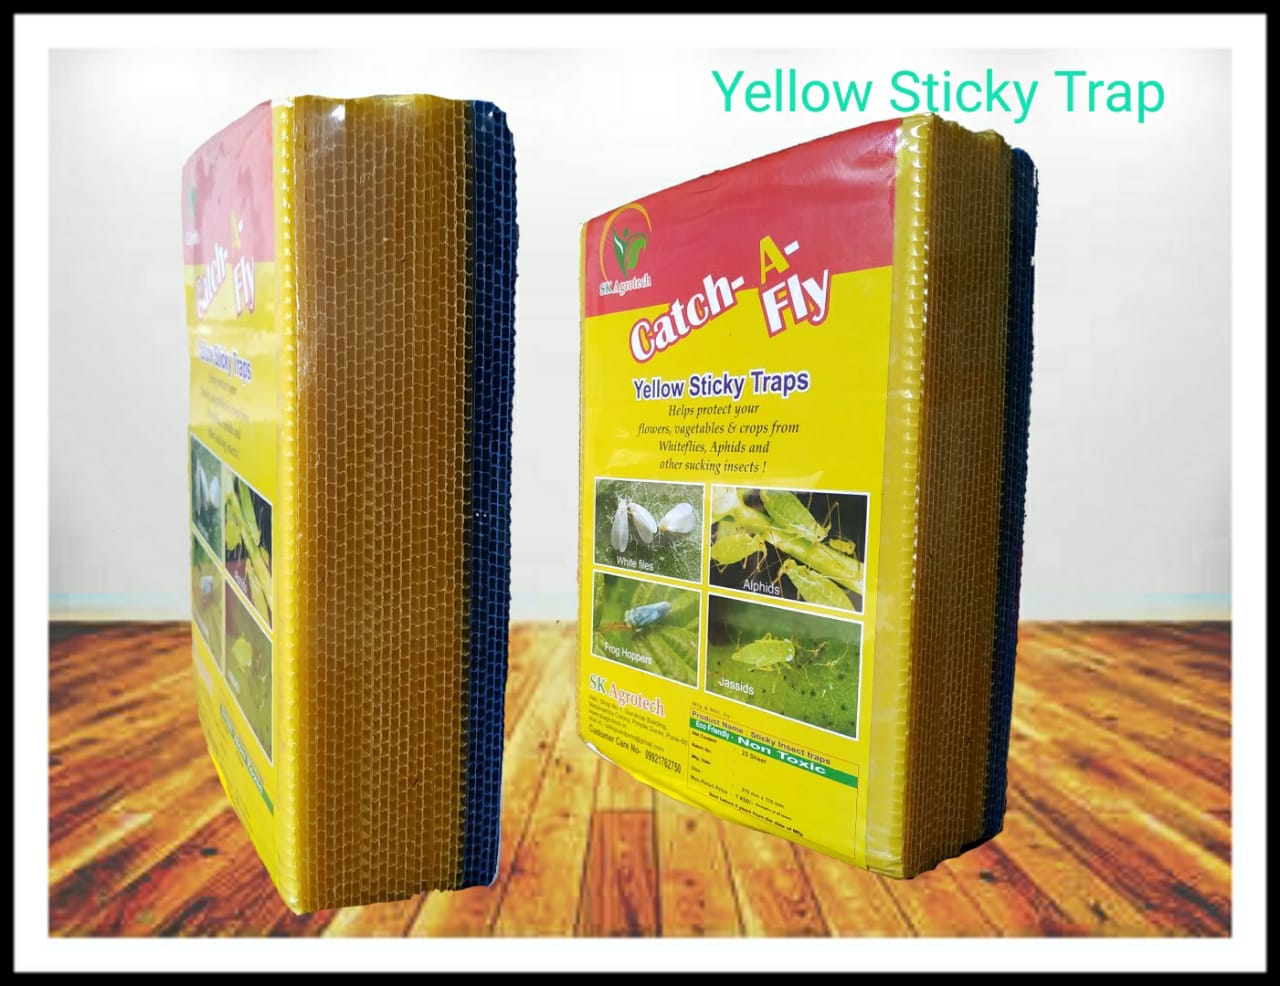   Yellow sticky insect pheromone trap Sunpack